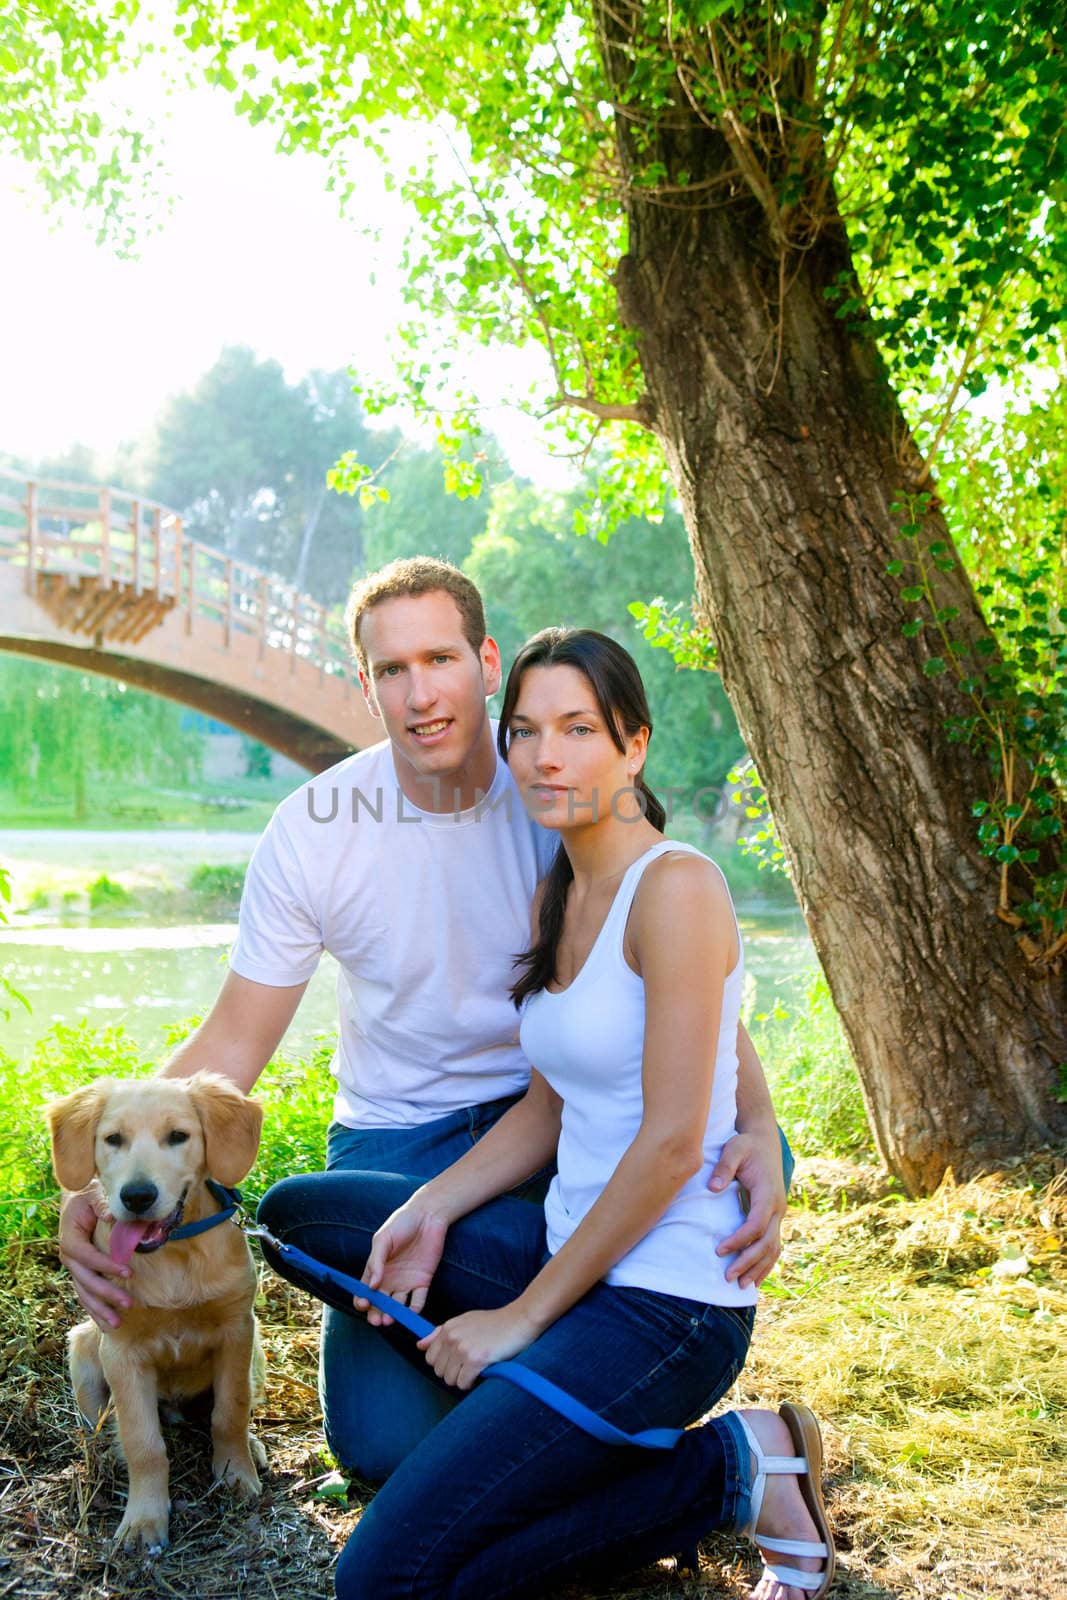 couple happy posing with golden retirever dog in outdoor park